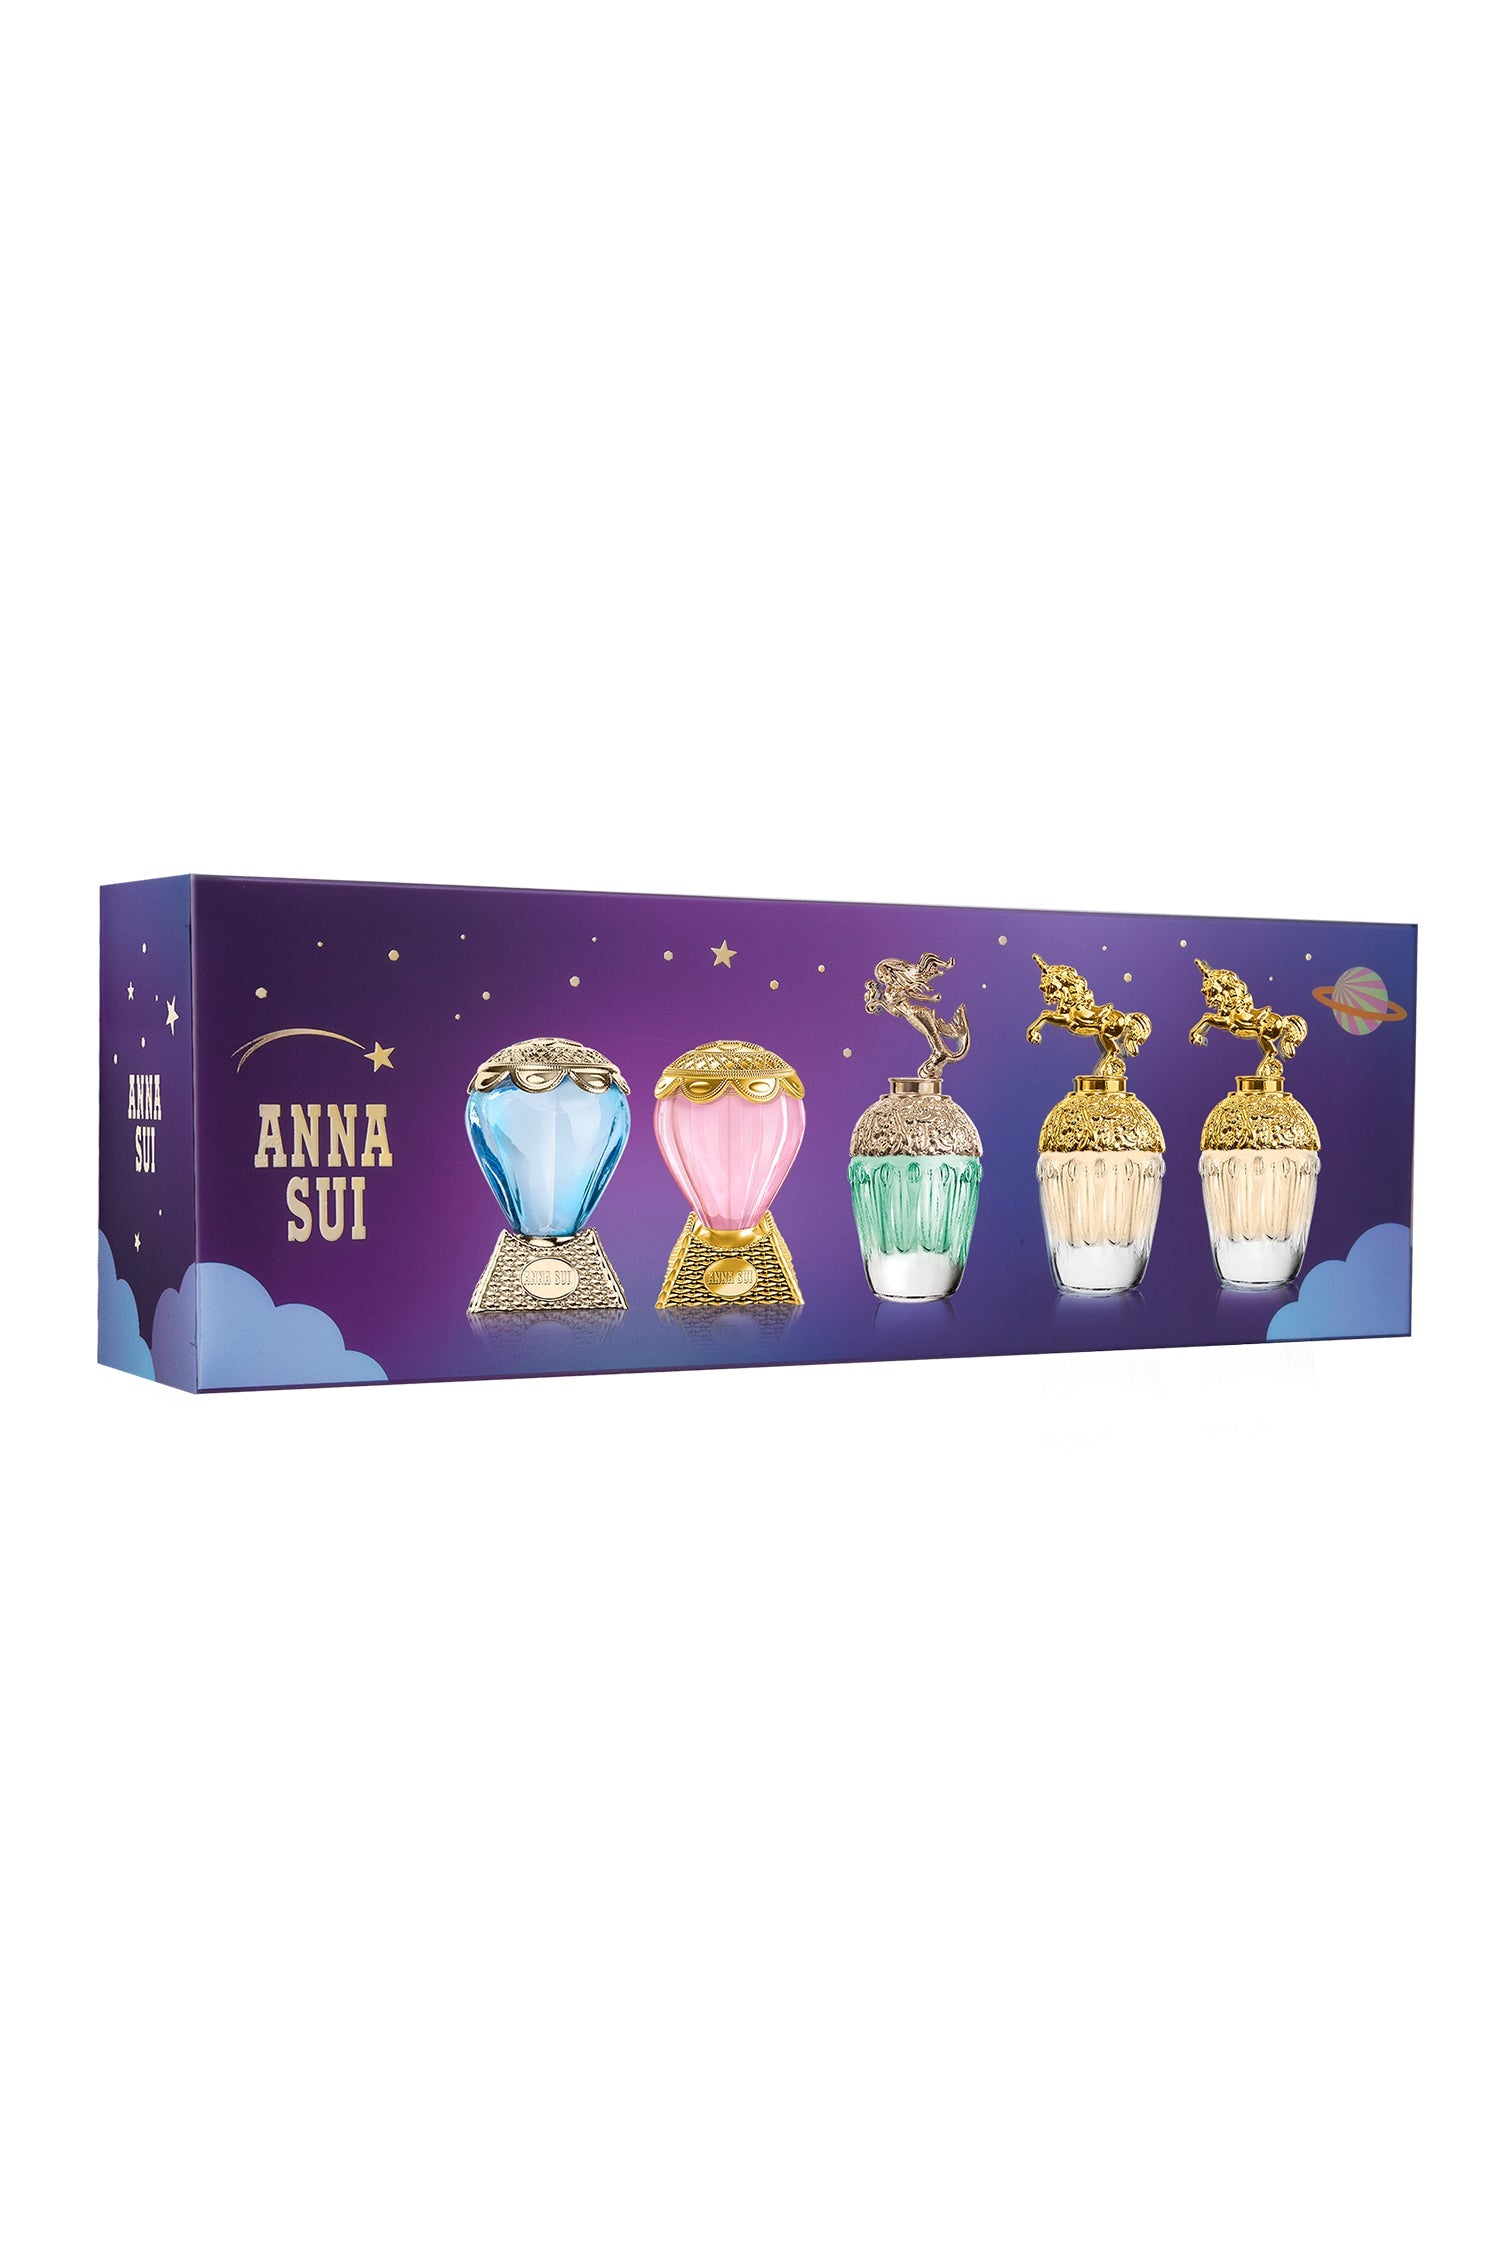 Contains, Cosmic Sky, Sky, Fantasia Mermaid, and 2-Fantasia with a description of each fragrance